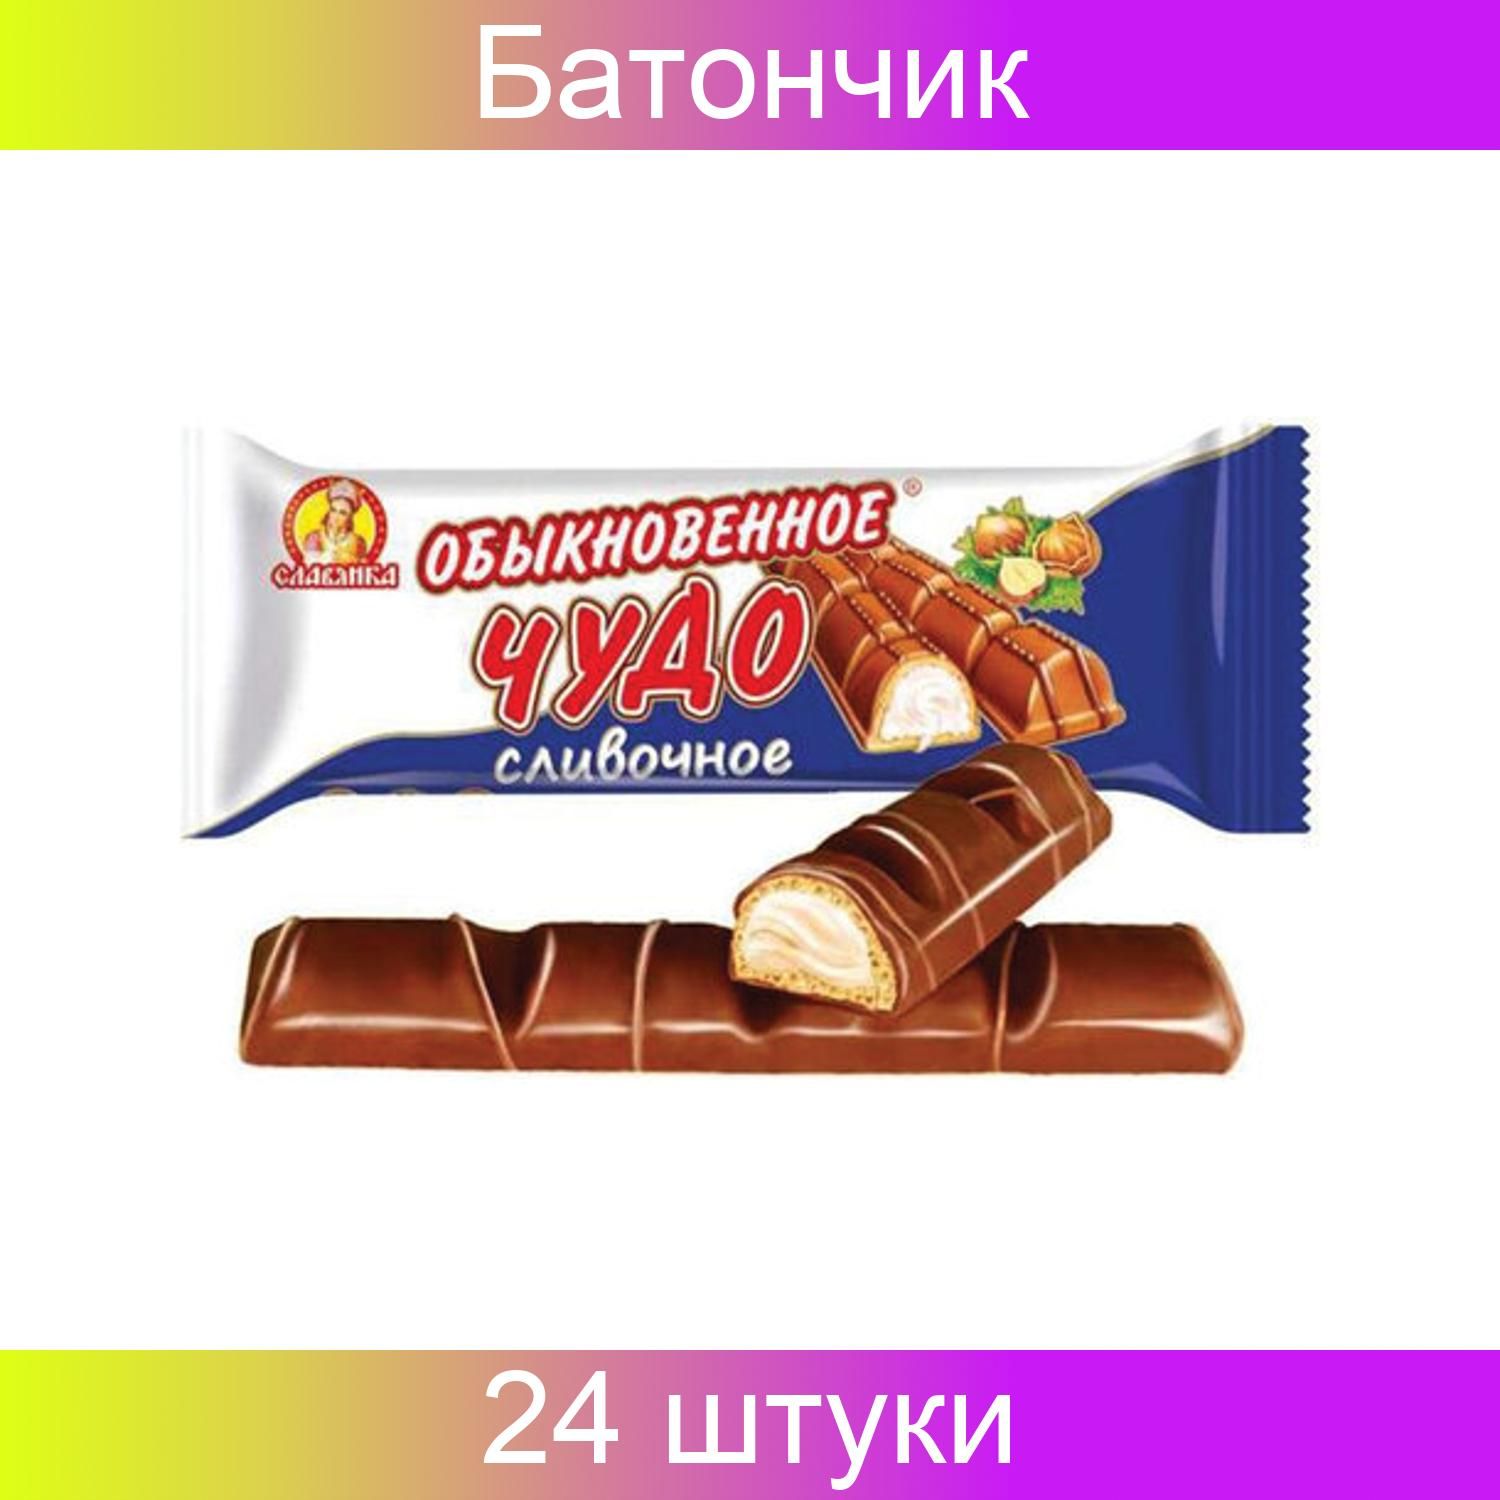 Чудо Шоколадка Вафельная